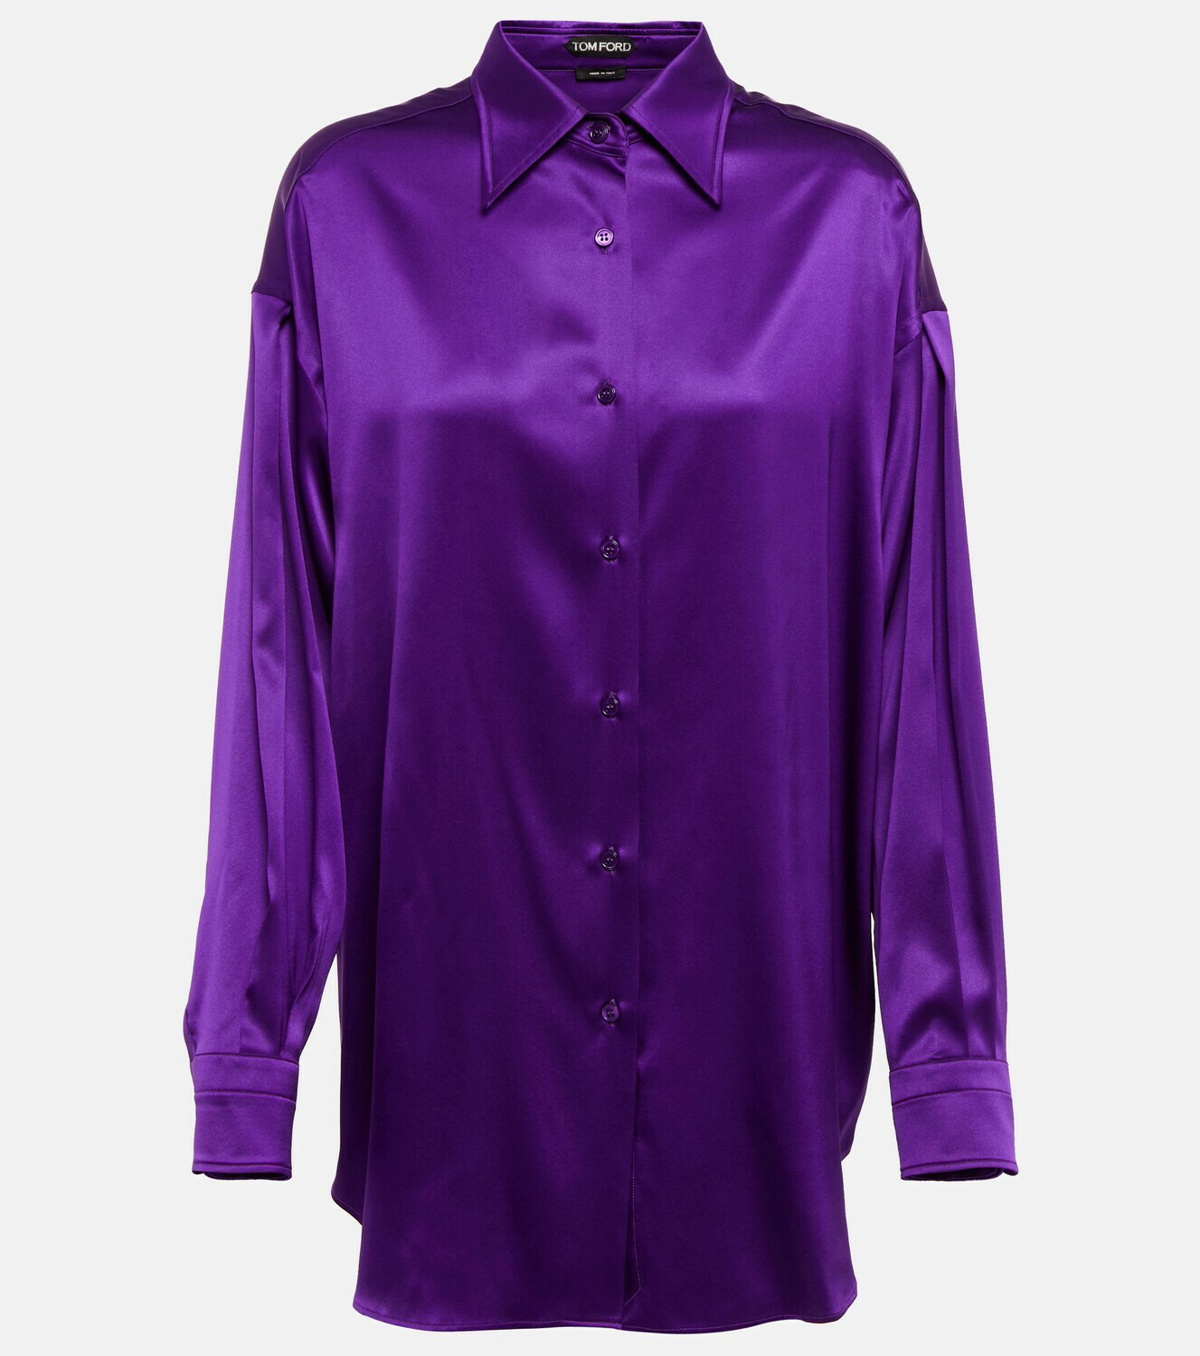 Tom Ford - Silk-blend satin shirt TOM FORD